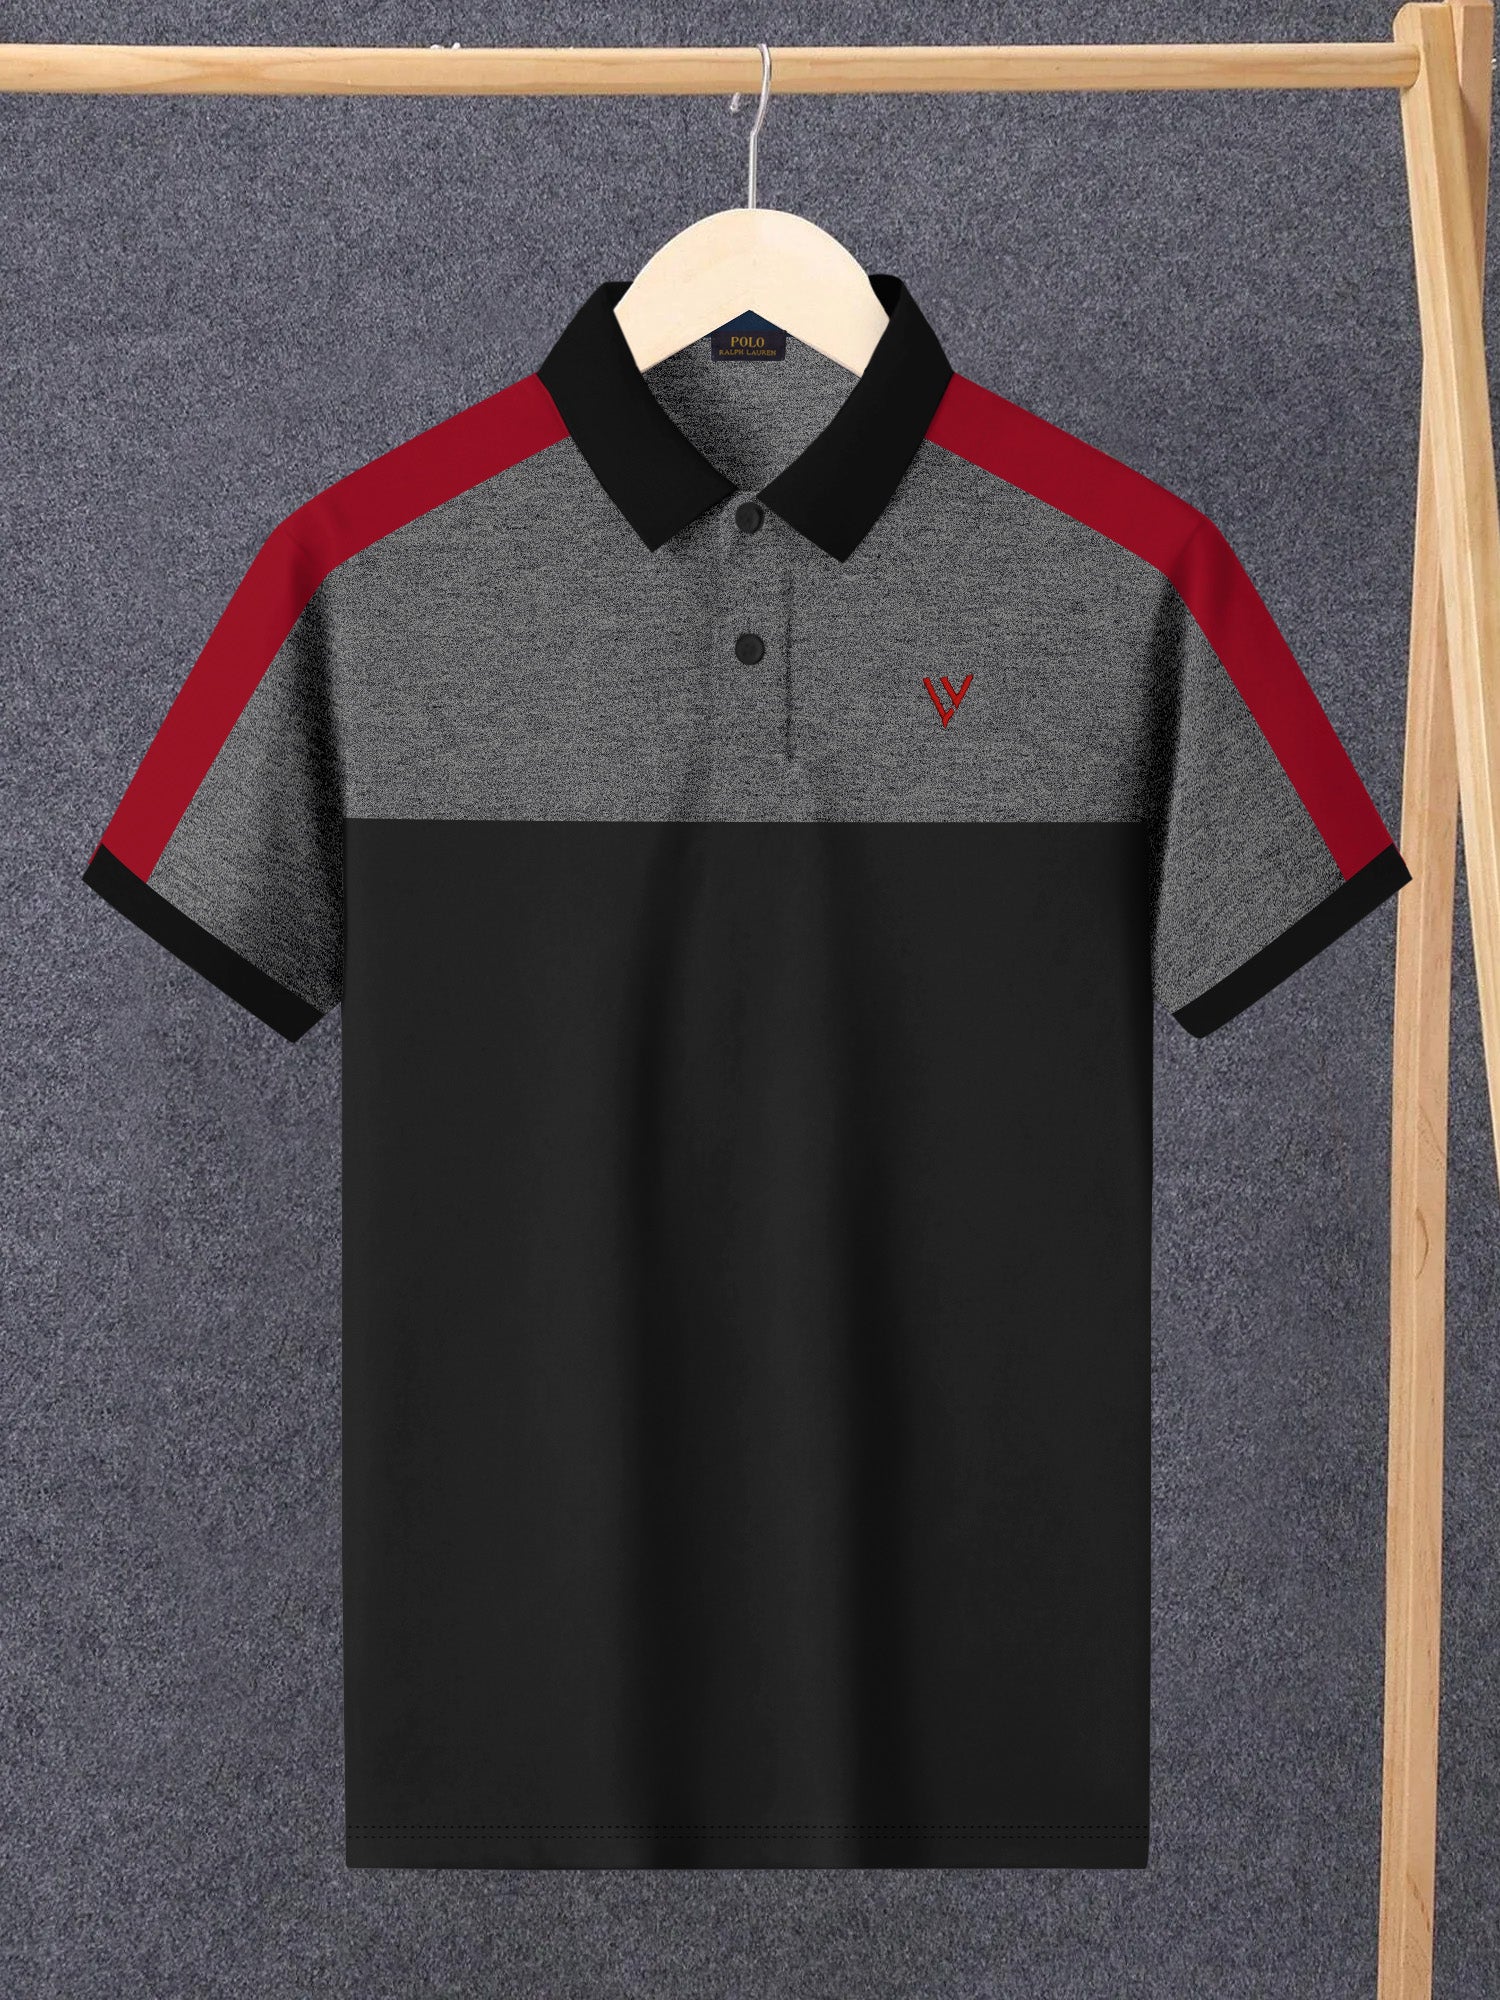 LV Summer Polo Shirt For Men-Grey Melange with Black-BE796/BE13038